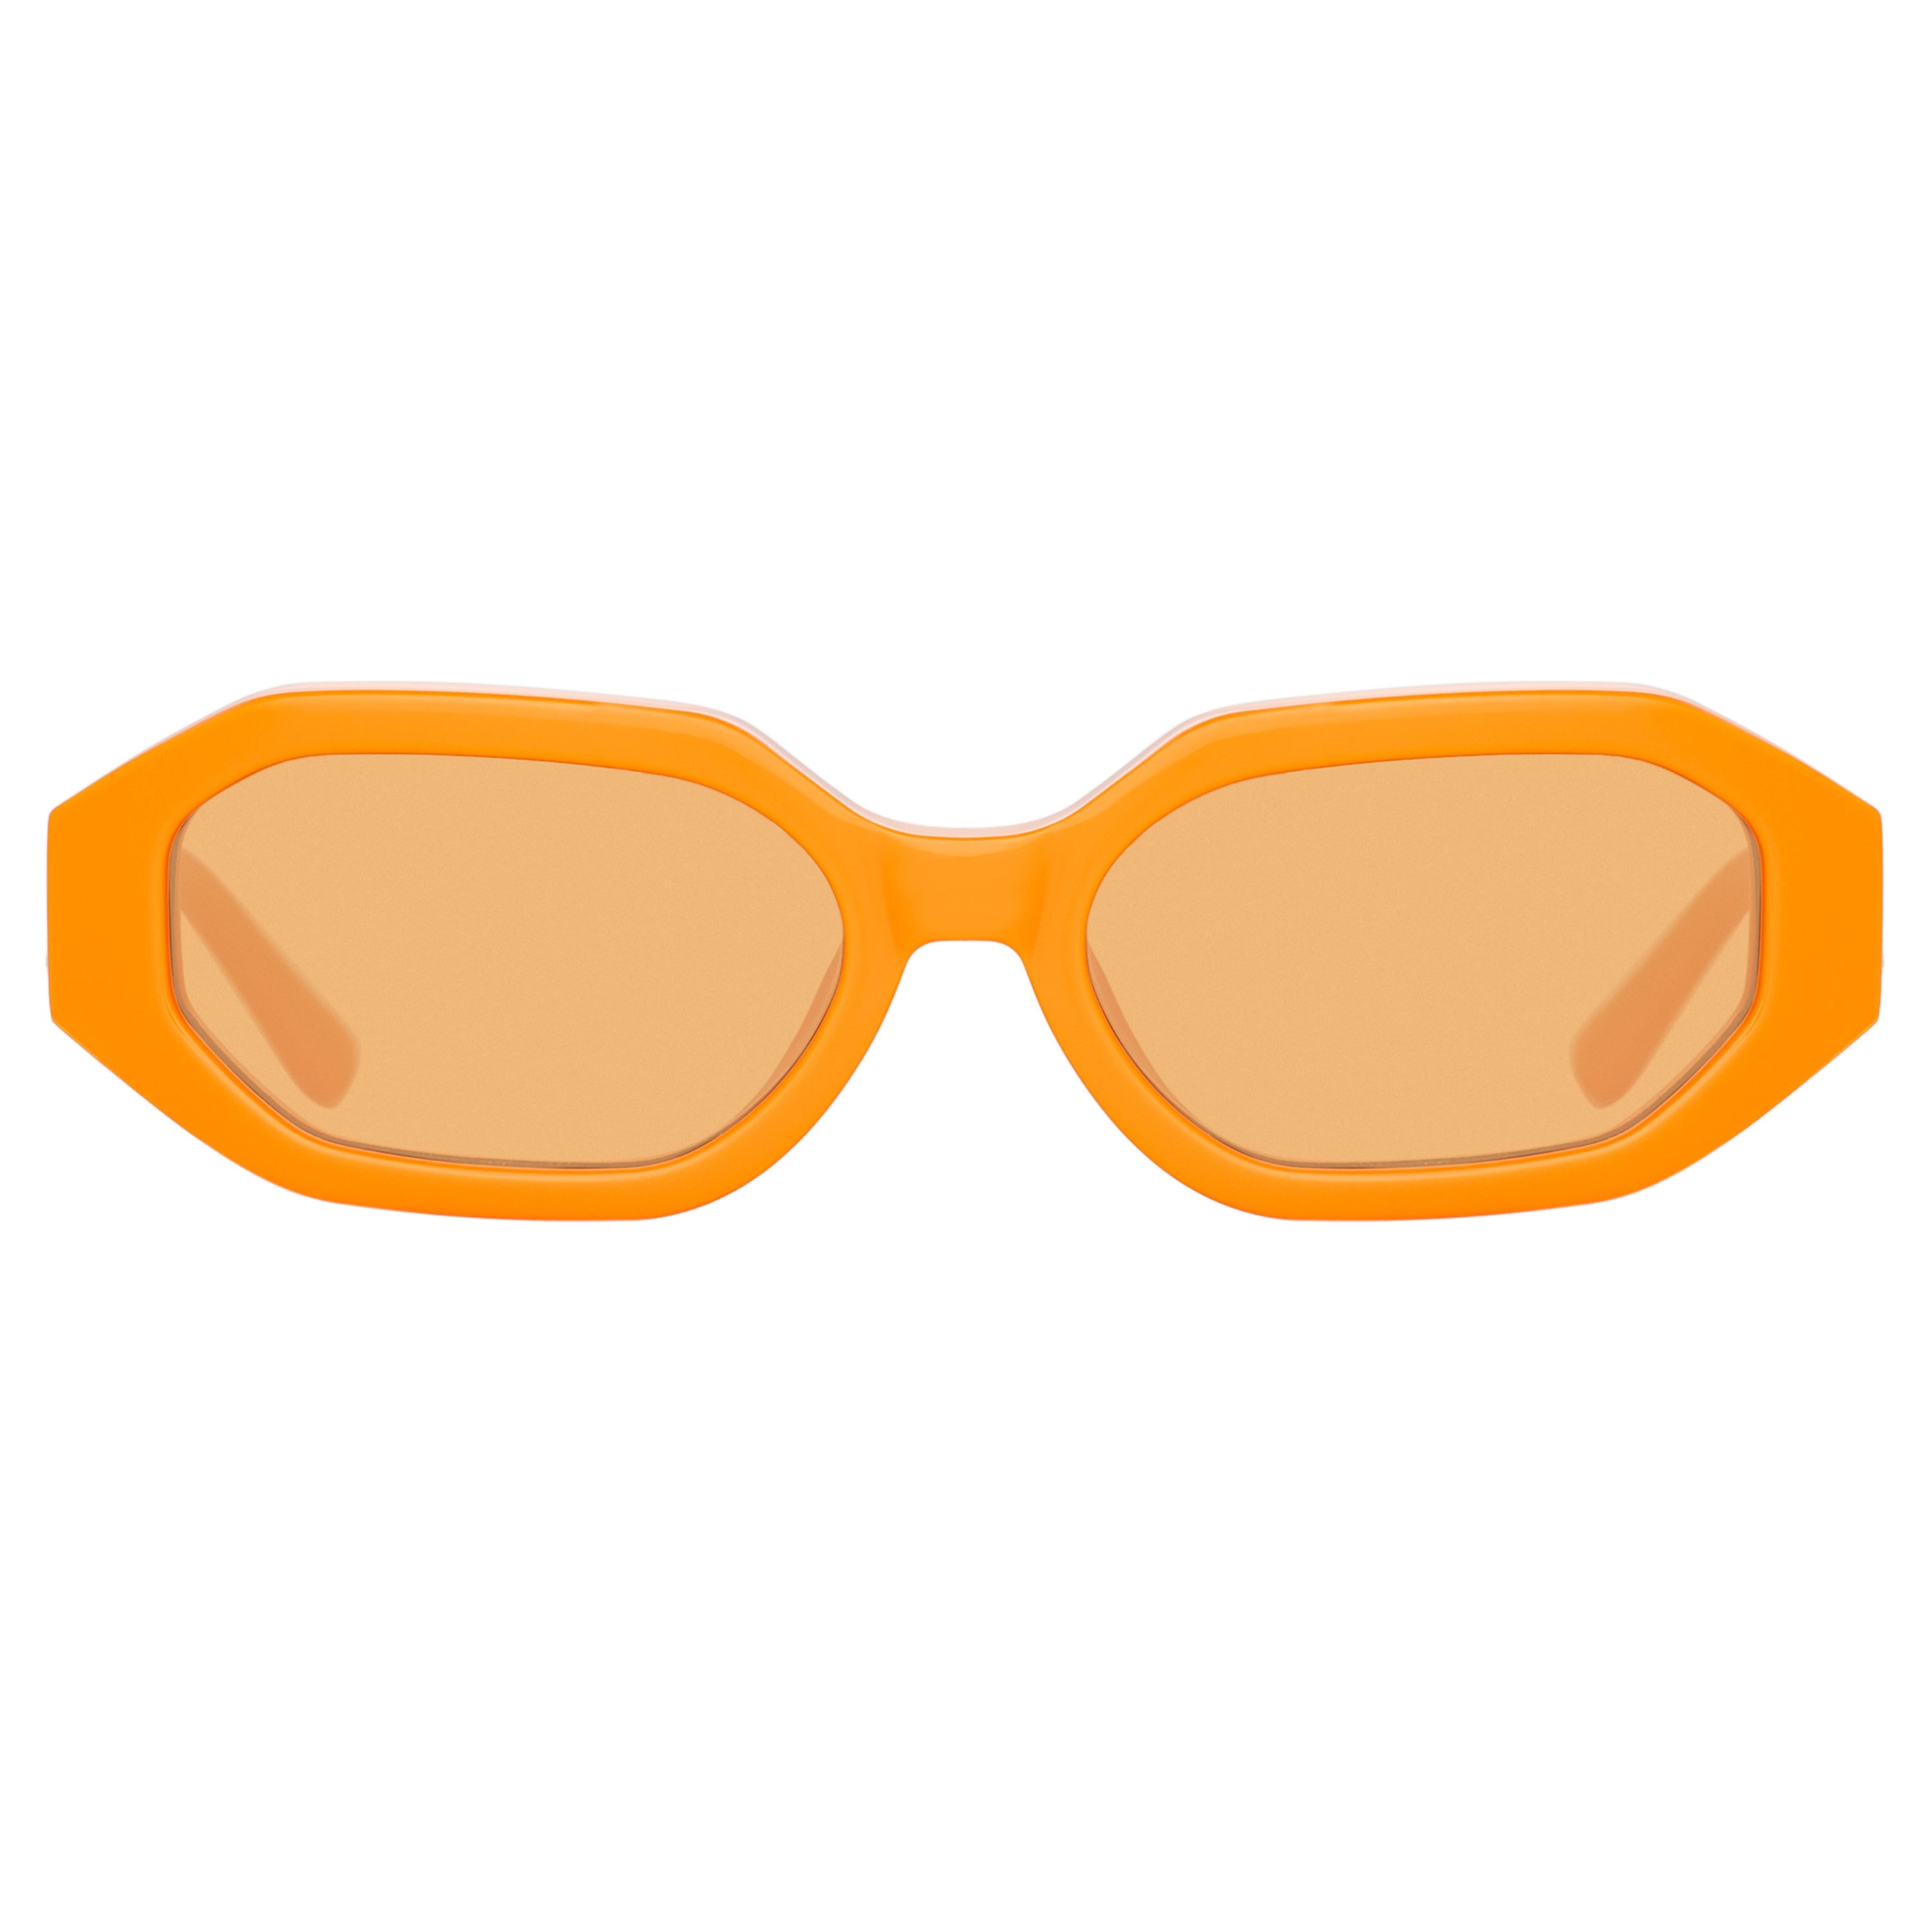 The Attico Irene Angular Sunglasses in Orange